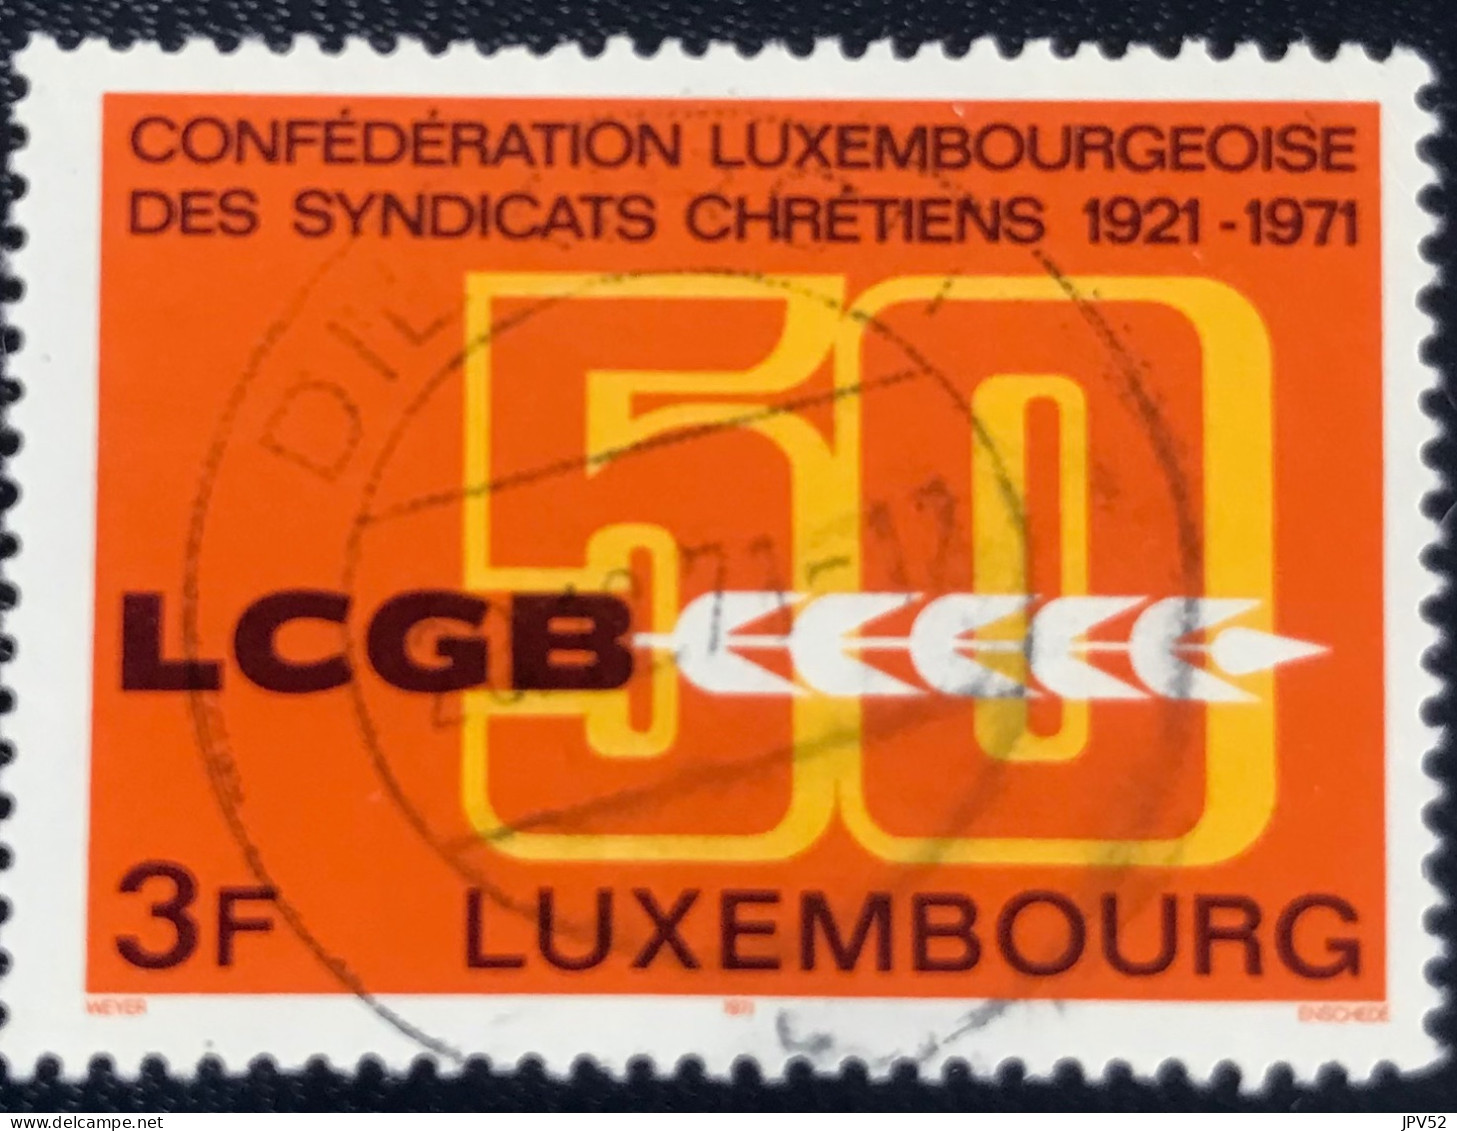 Luxembourg - Luxemburg - C18/31 - 1971 - (°)used - Michel 827 - LCGB Embleem - Usati